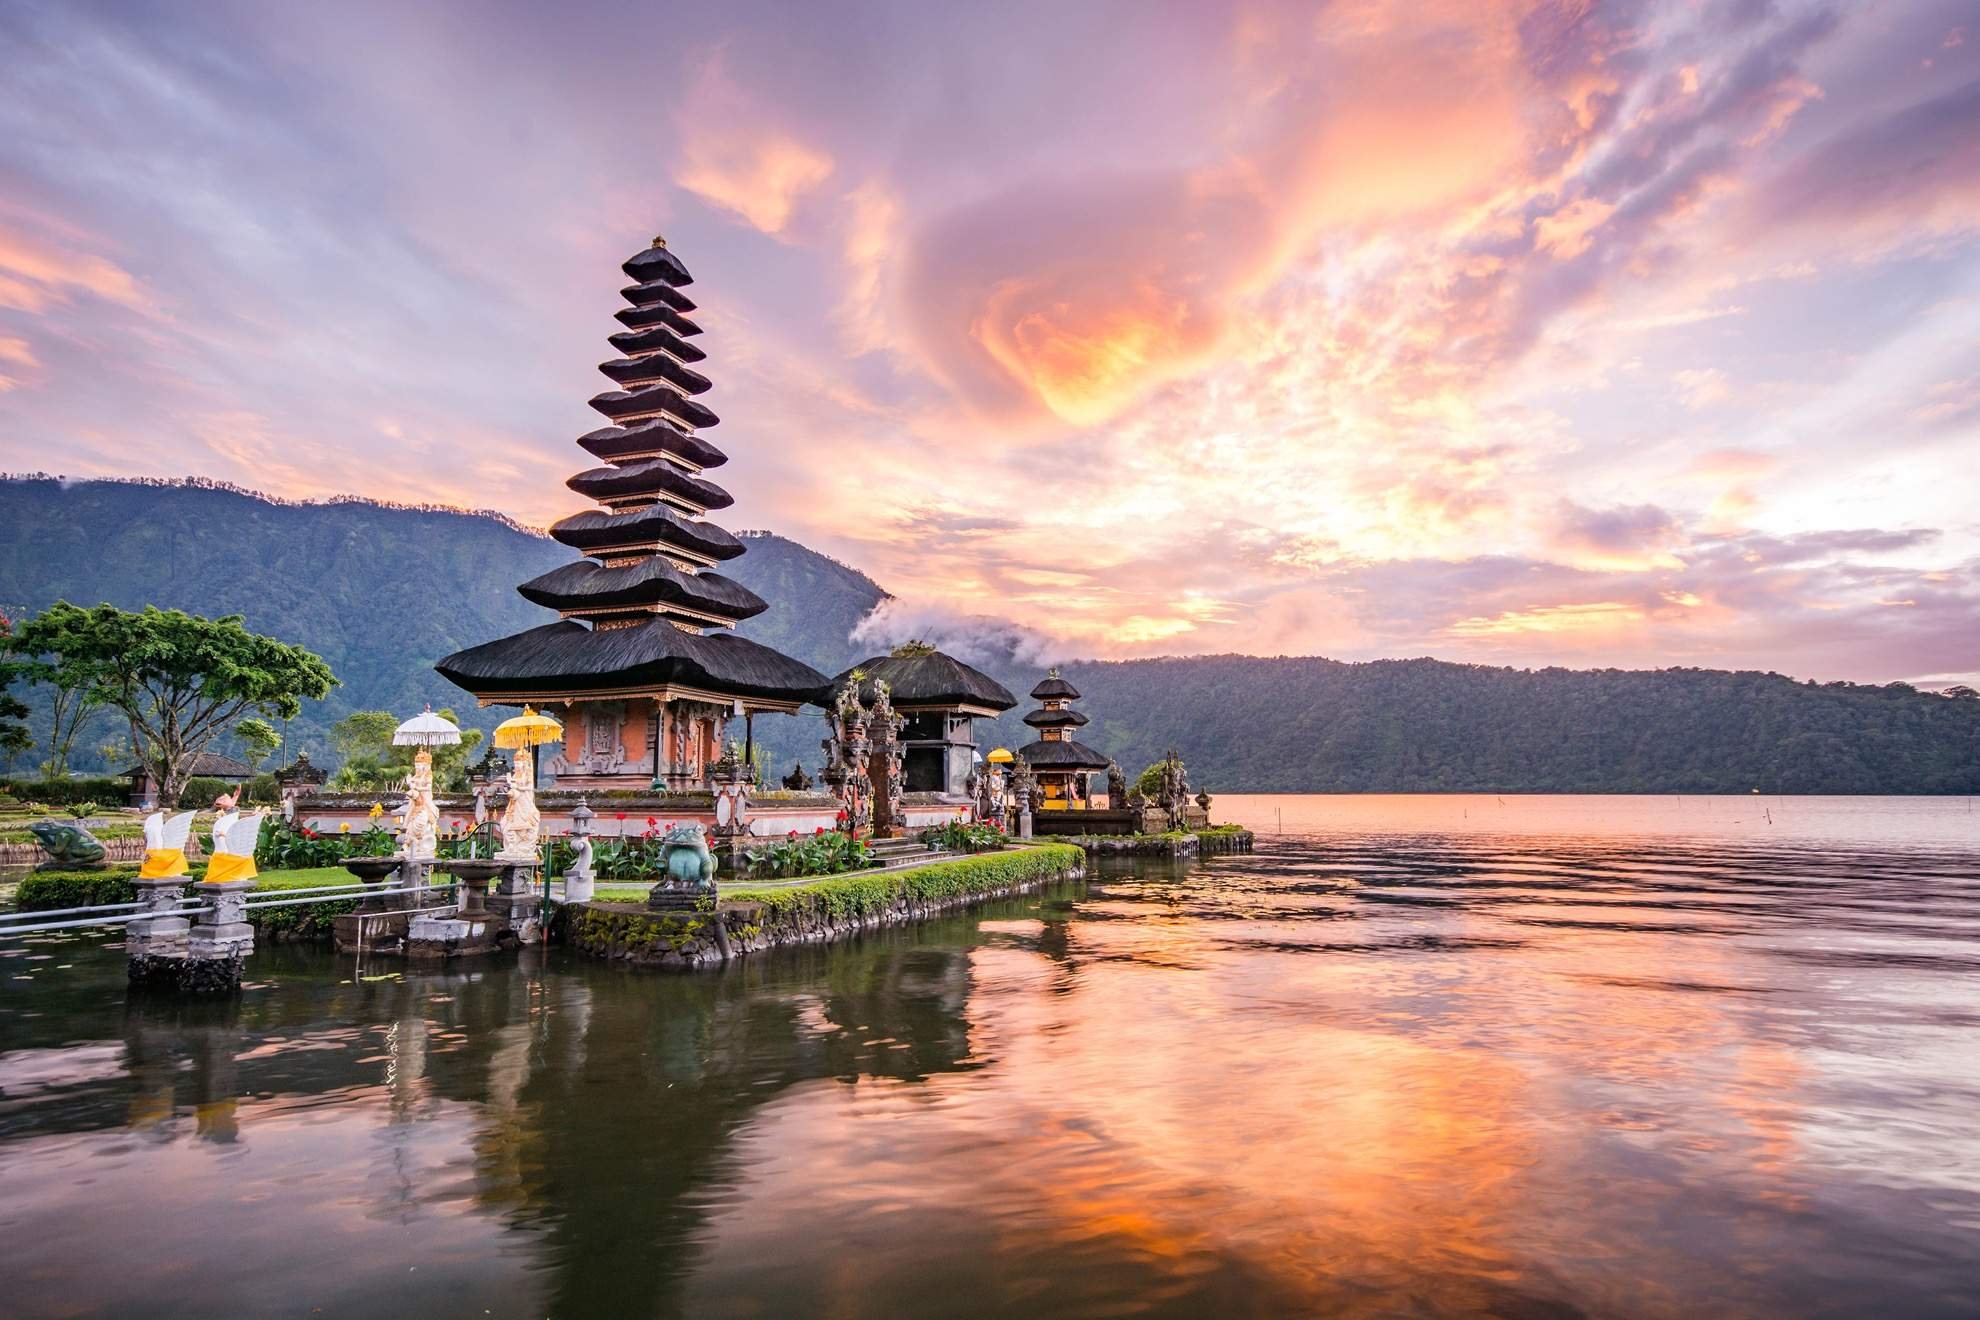 Храм Пура улун дану на озере братан, Индонезия